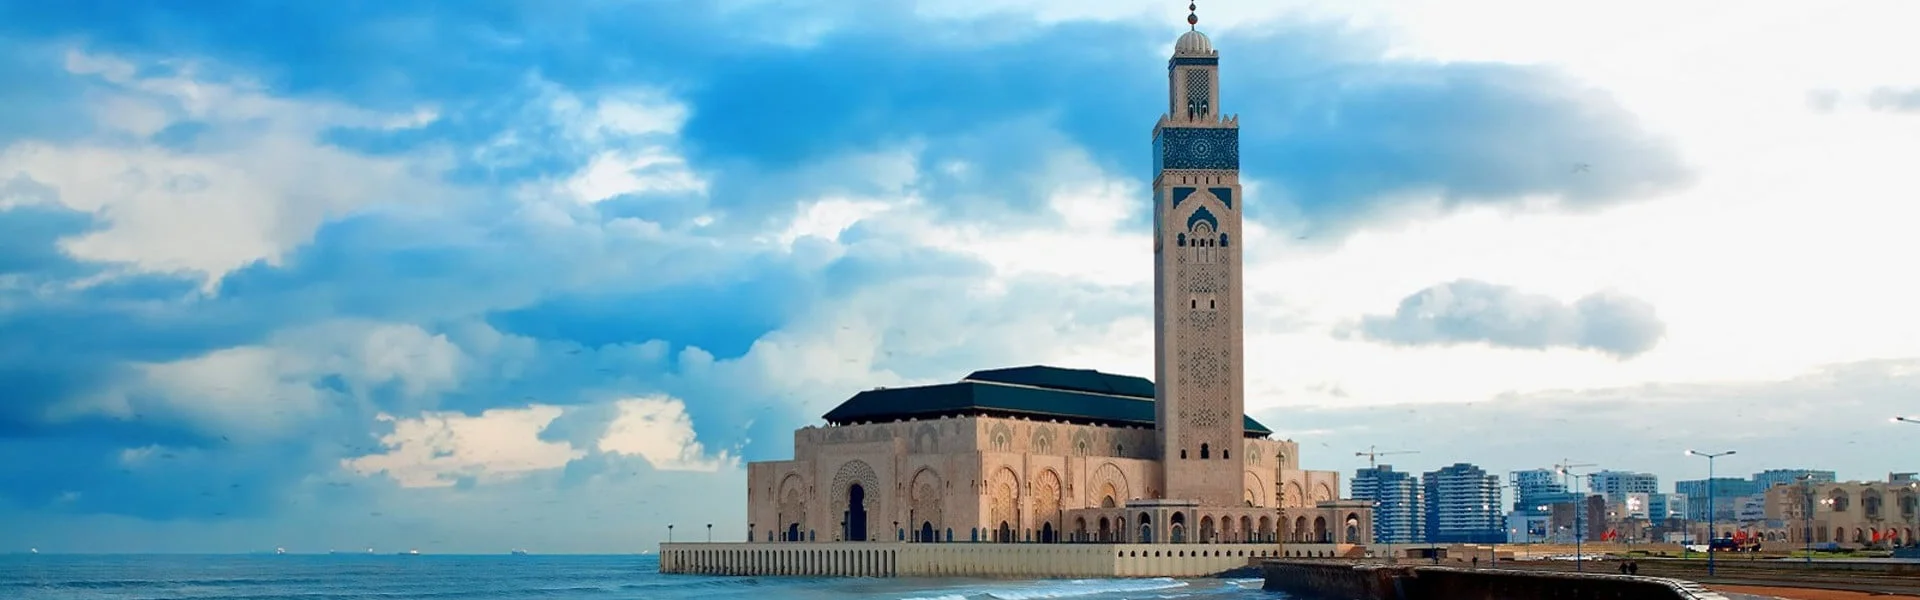 Casablanca Port Shore Excursions: Top Picks for Cruise Stops